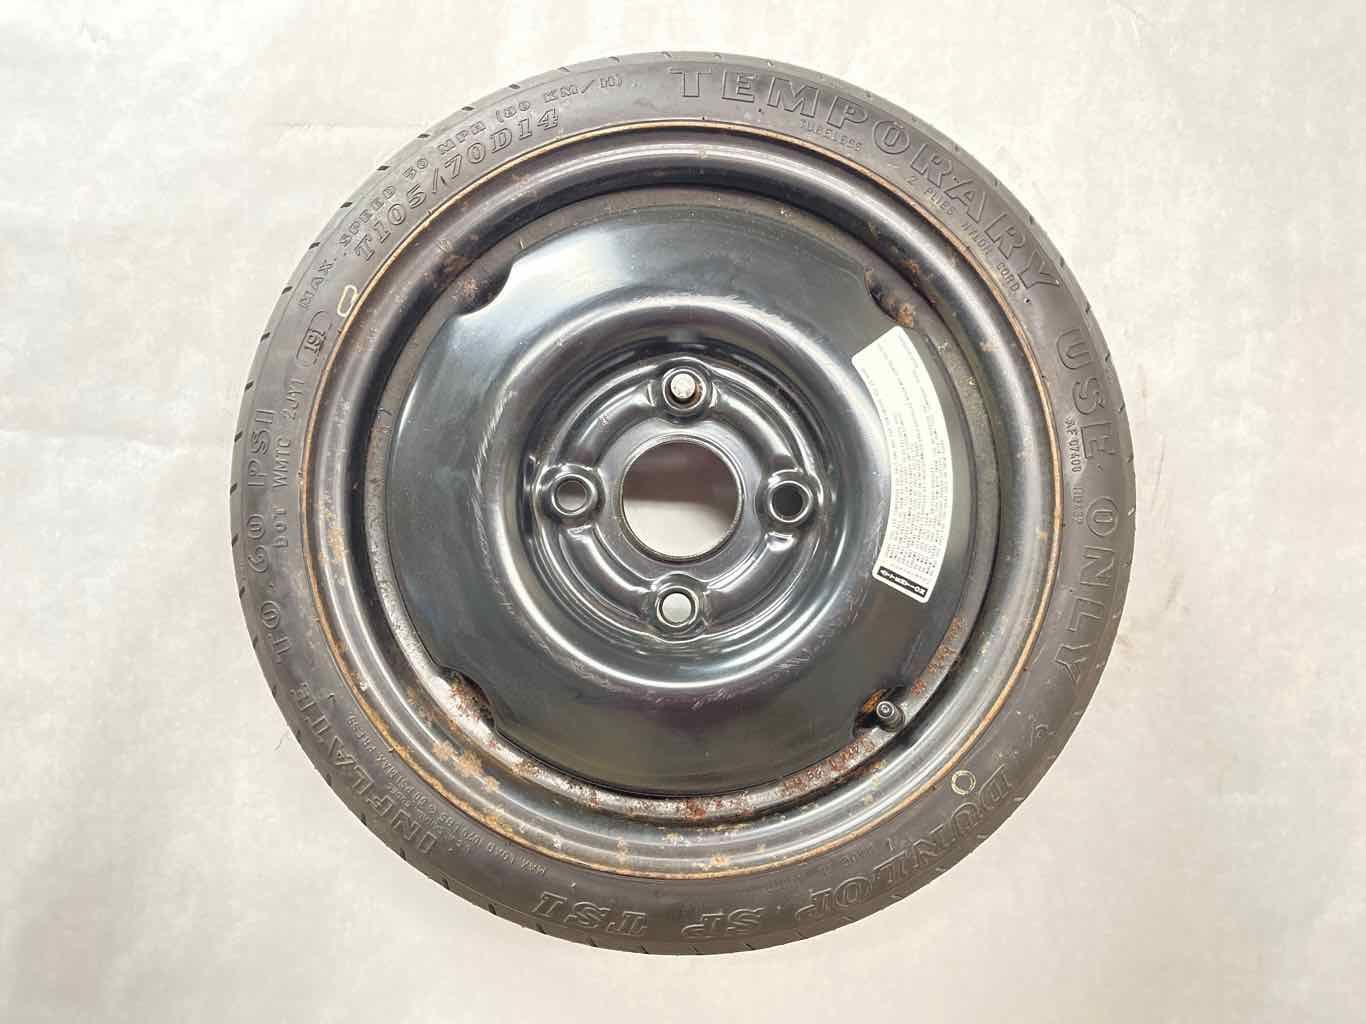 1991 1992 1993 1994 Mercury Capri Compact Spare Tire Space Saver Donut 105/70/14